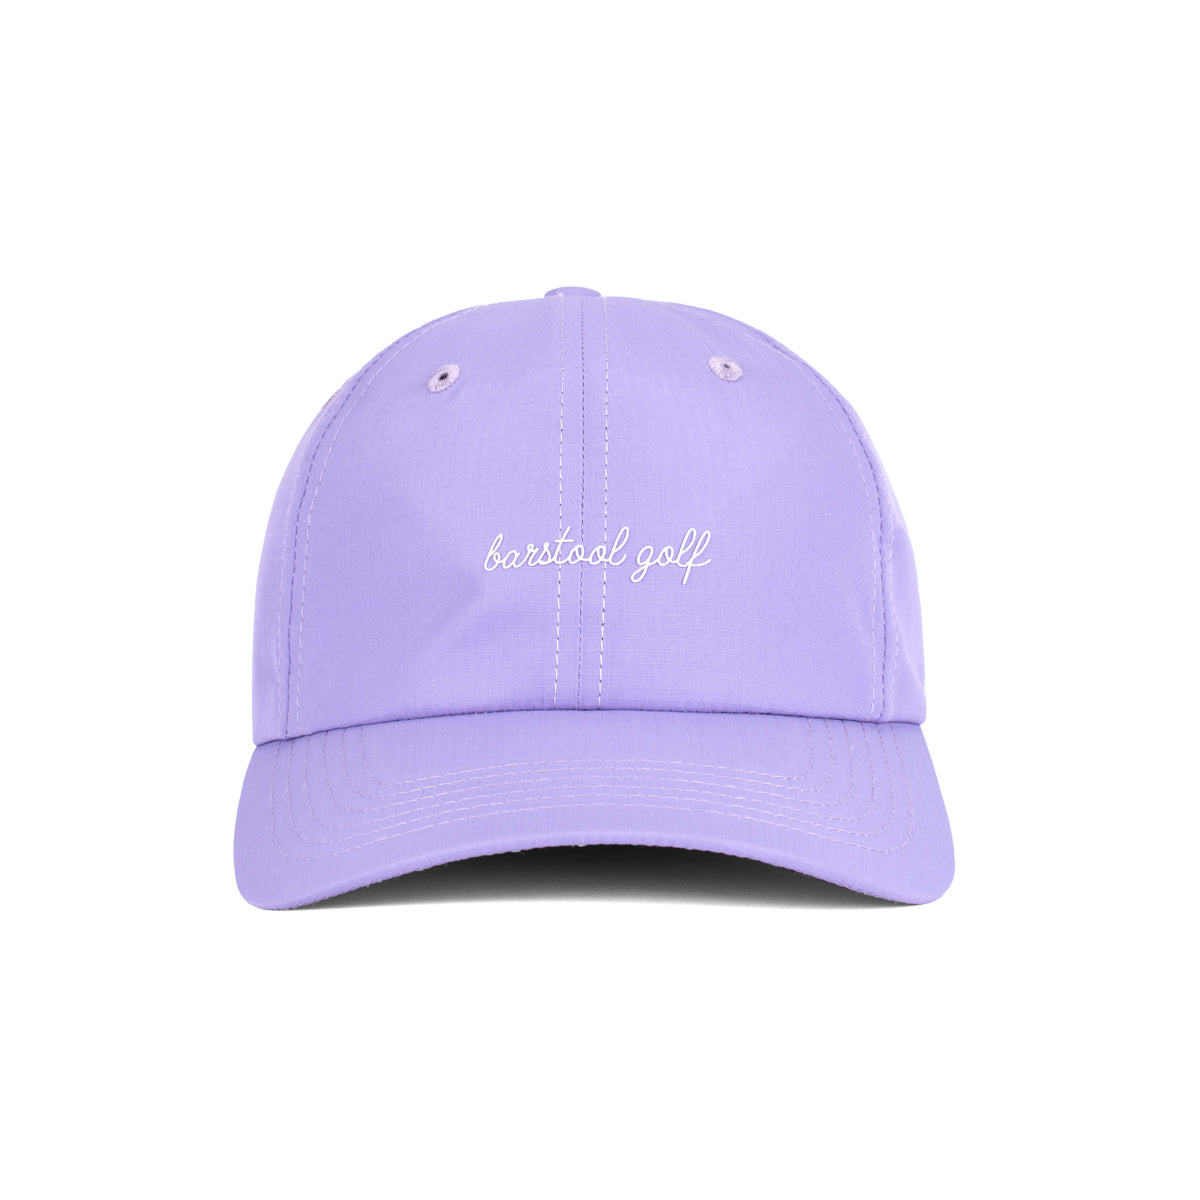 Barstool Golf Women's Dad Hat II